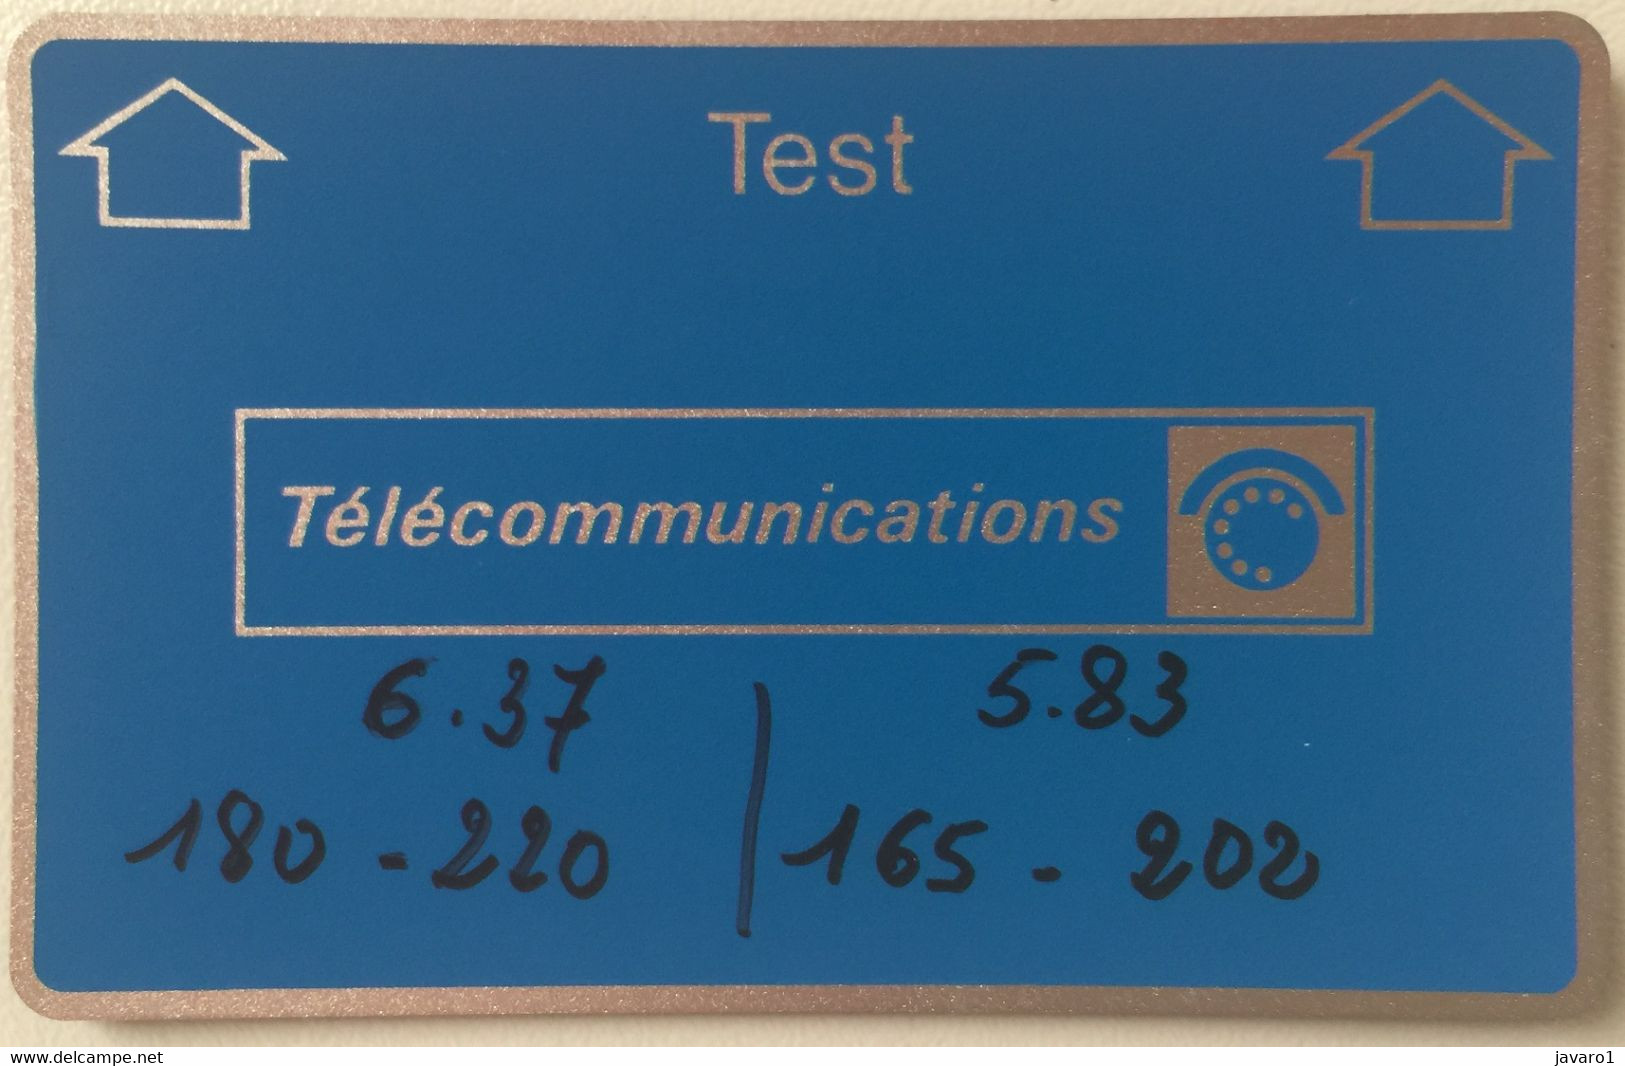 FRANCE : A21 TEST Chiffres Inscrites Noir 6.37-5.83 MINT - Hologrammkarten